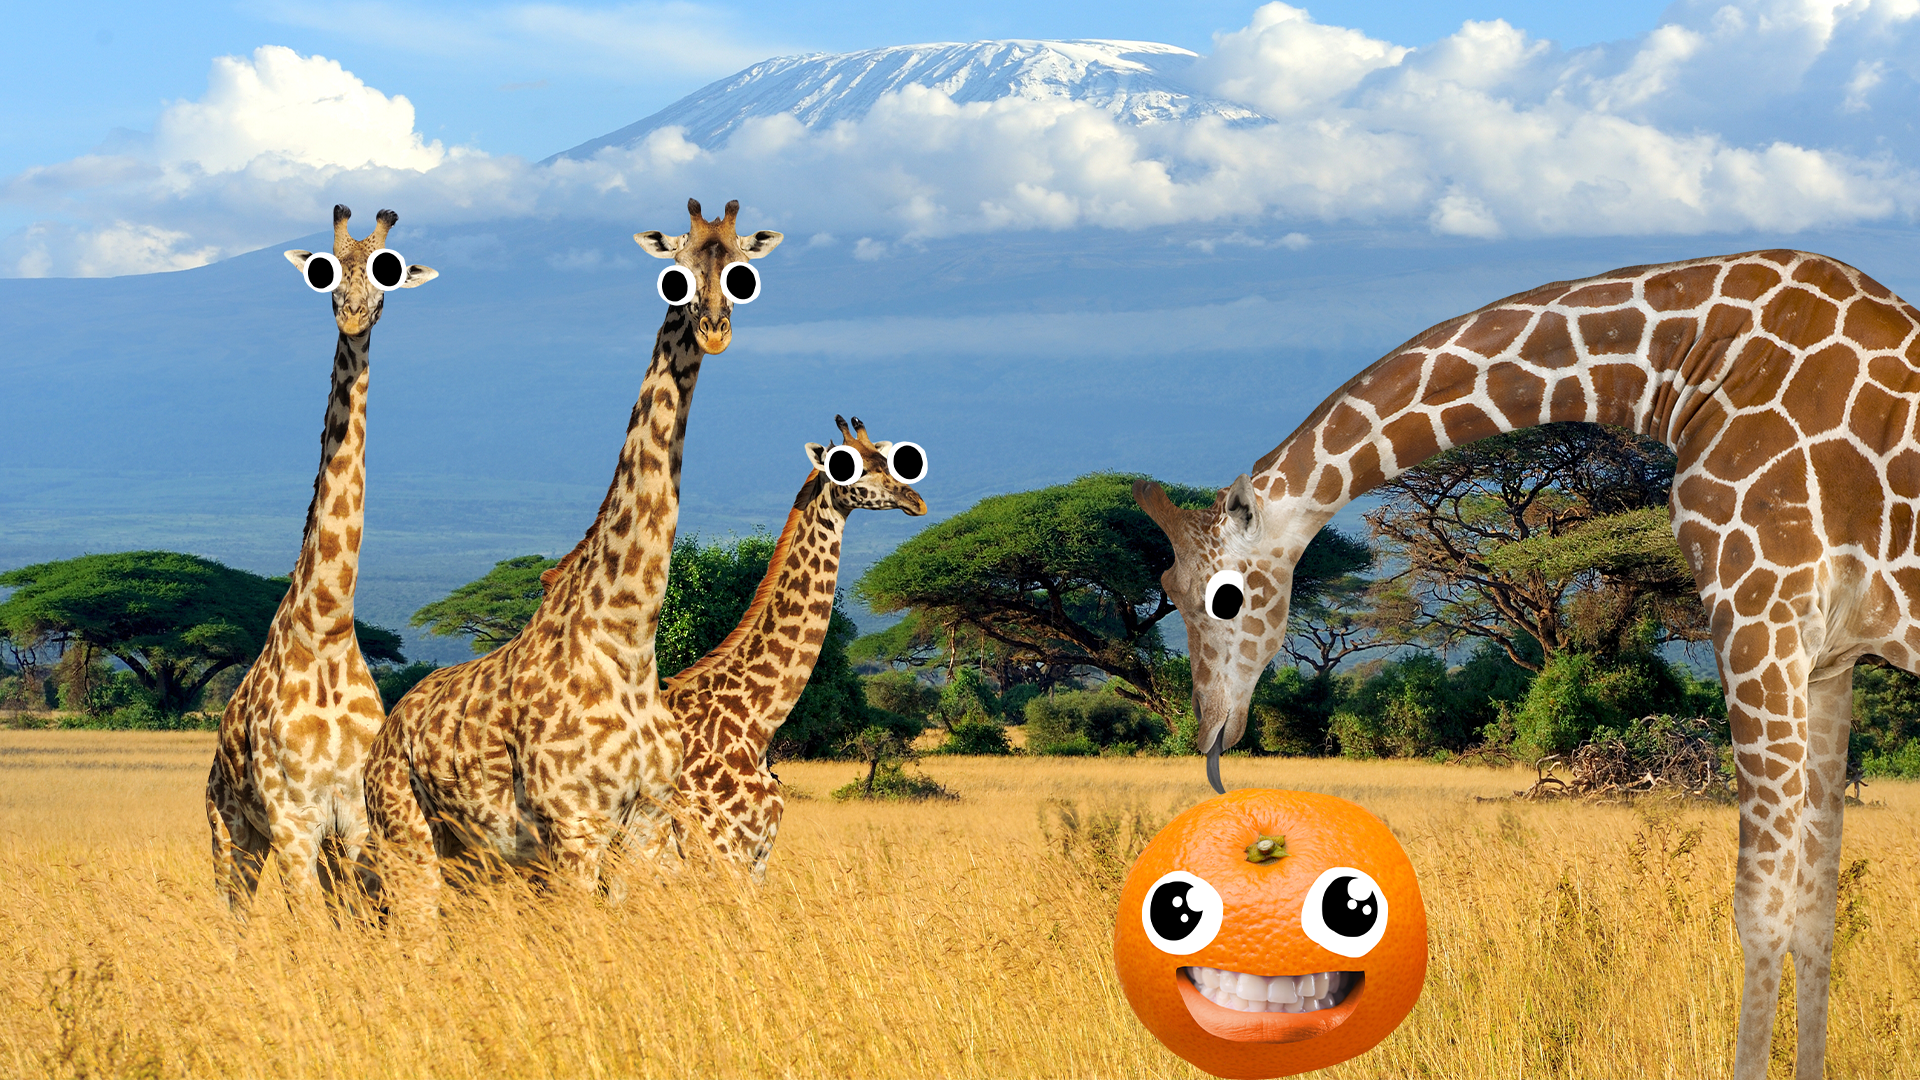 Giraffes on the Savannah and tangerine on face